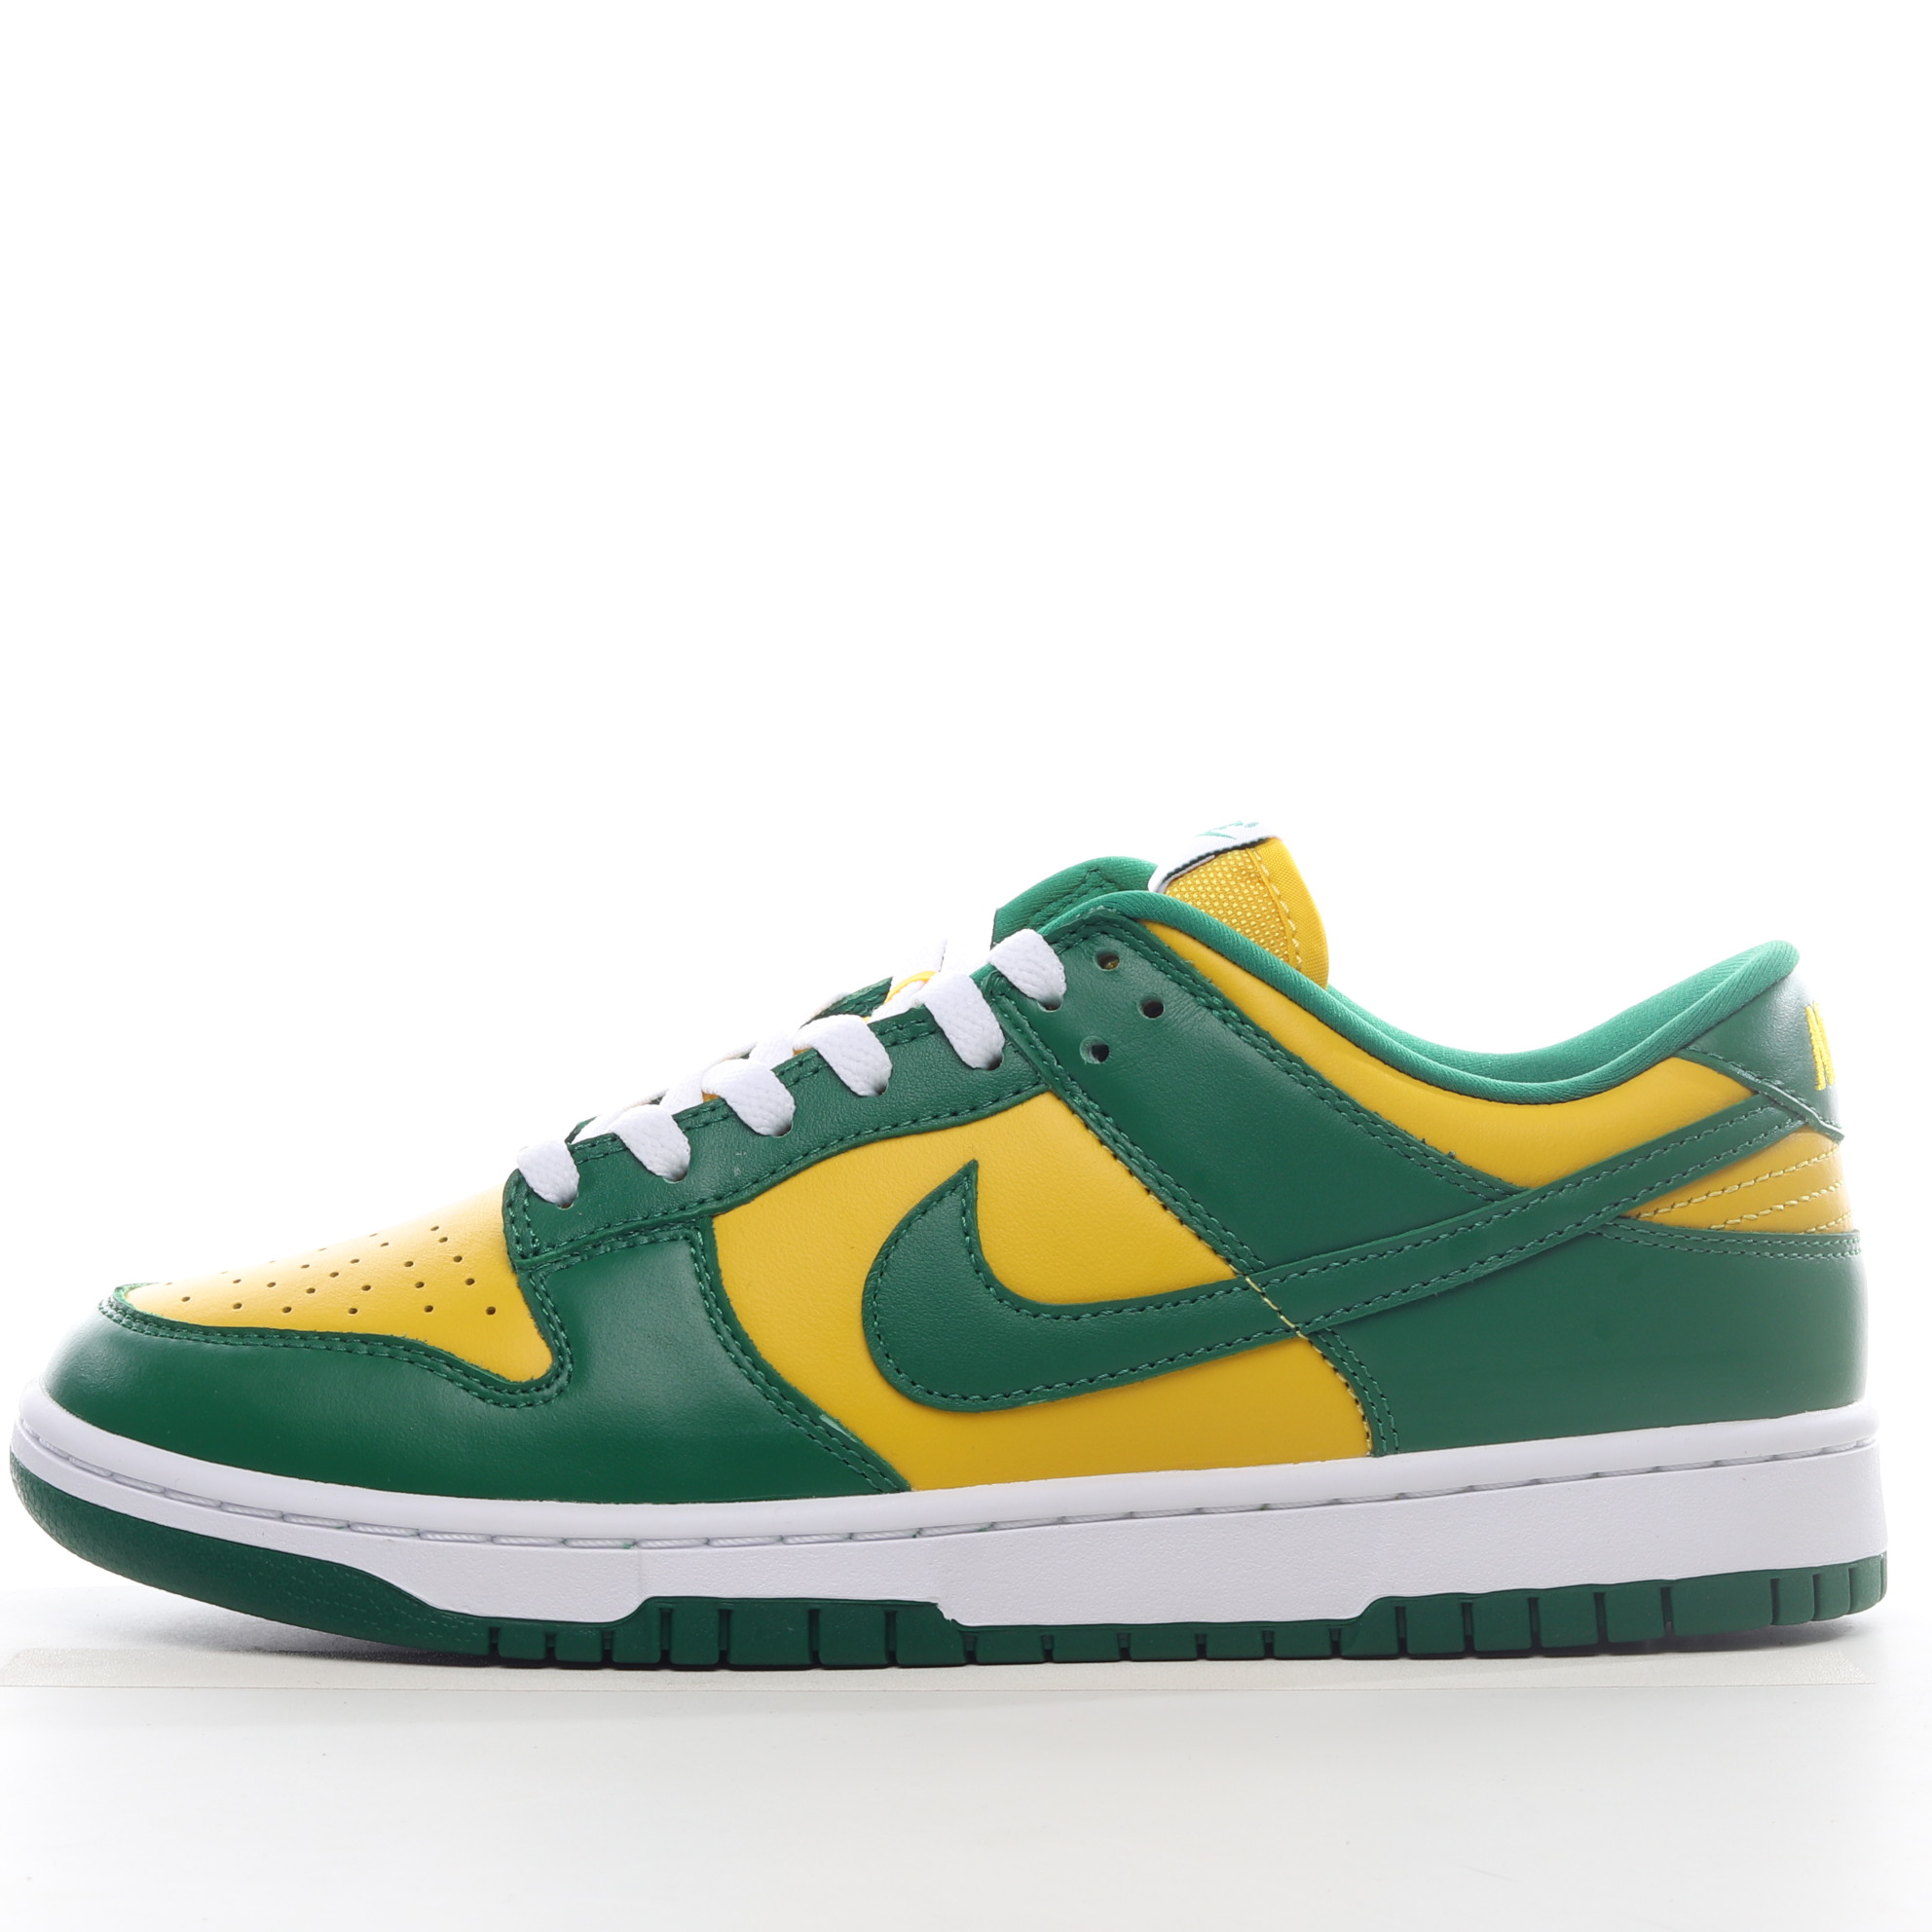 Men's Dunk Low SP Green/Yellow Shoes ''Brazil” 172